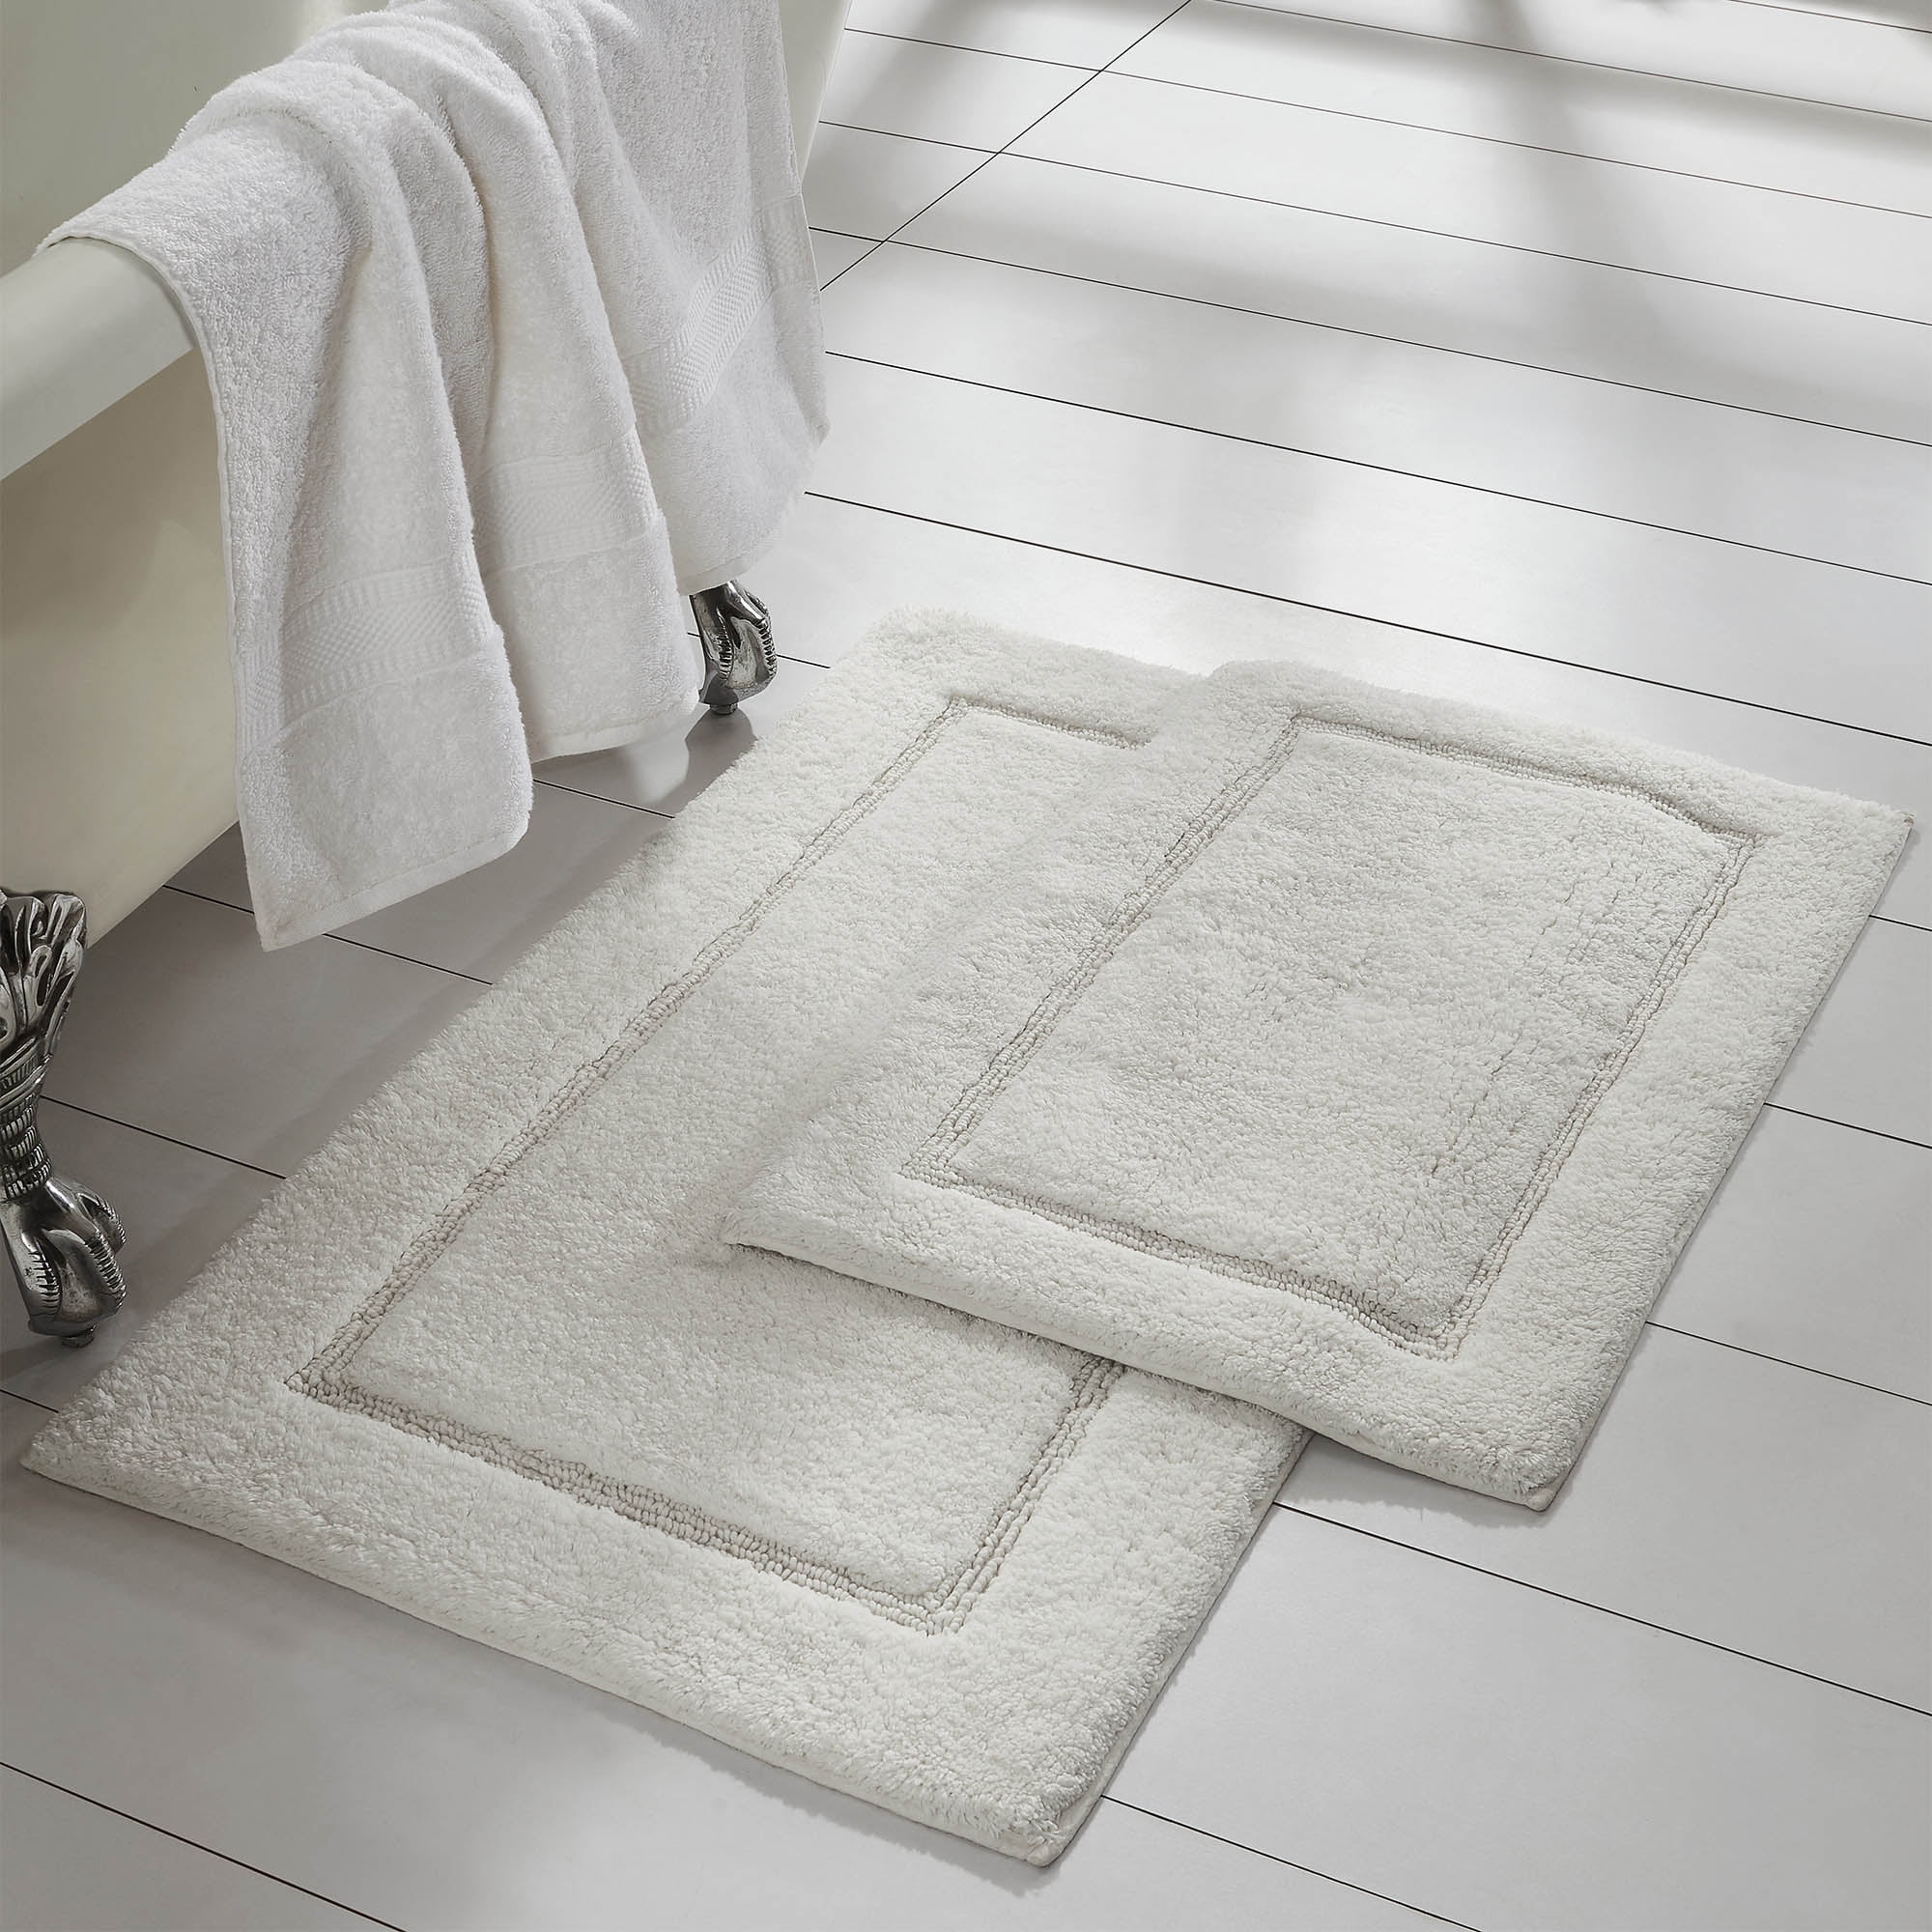 Reversible Bath Rug Floor Bathroom Rectangle Cotton White Shower 17 x 24 Inch 